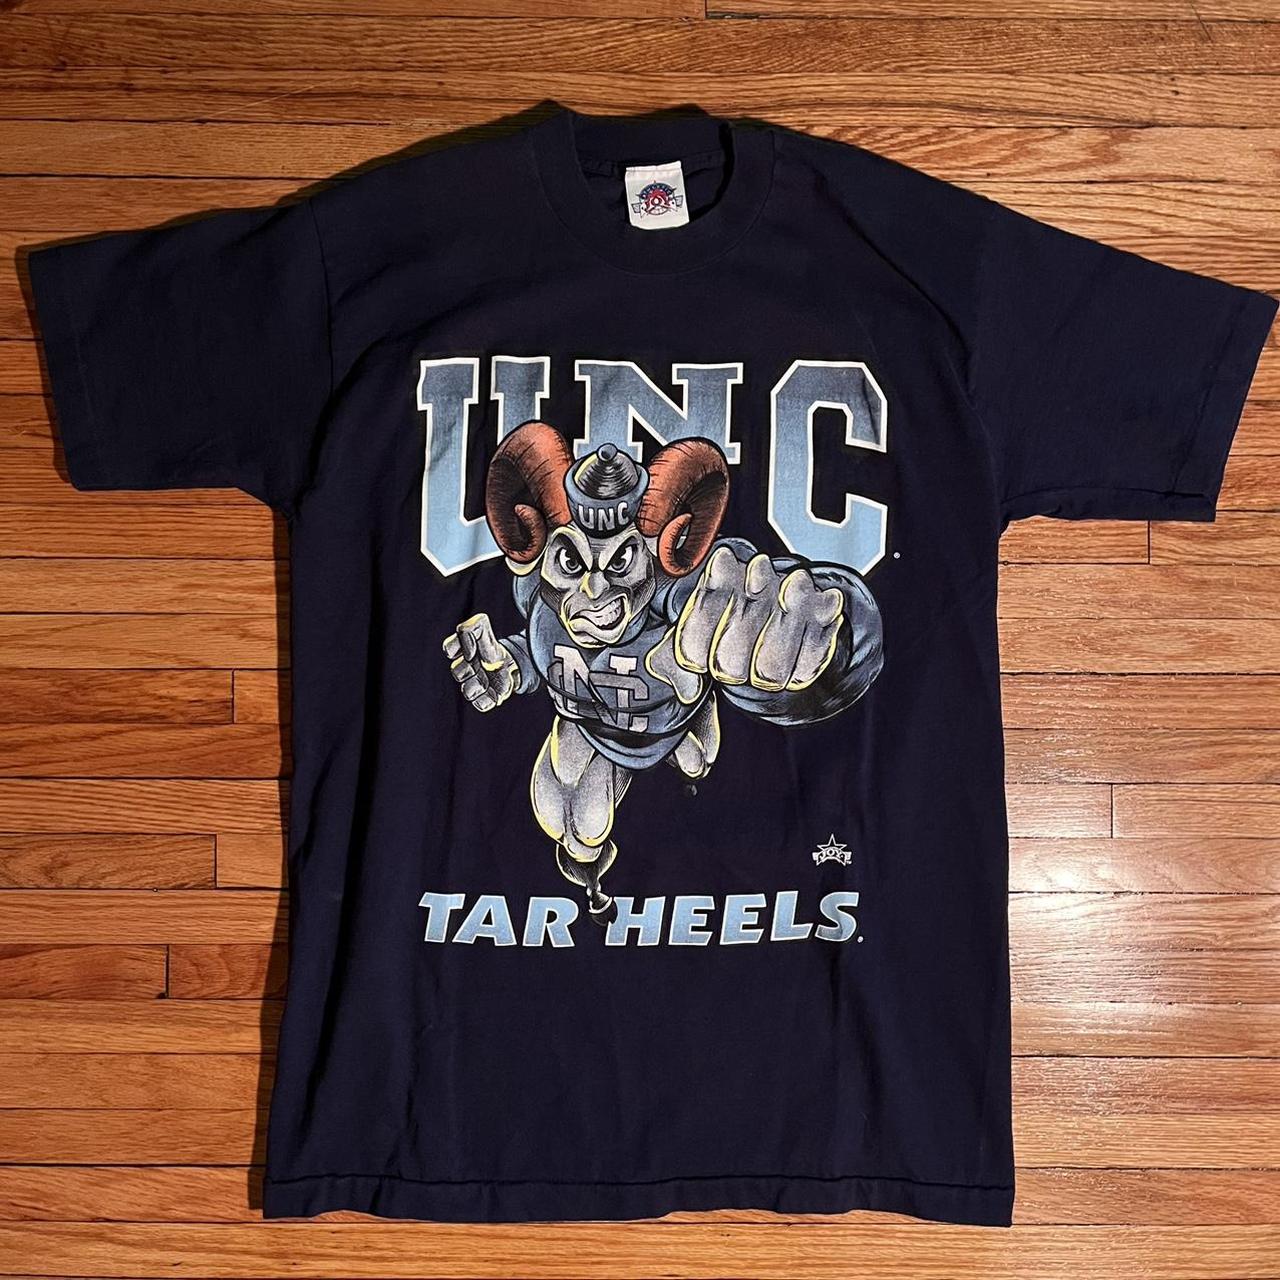 University of North Carolina, unc Vintage UNC Tar Heels Mascot